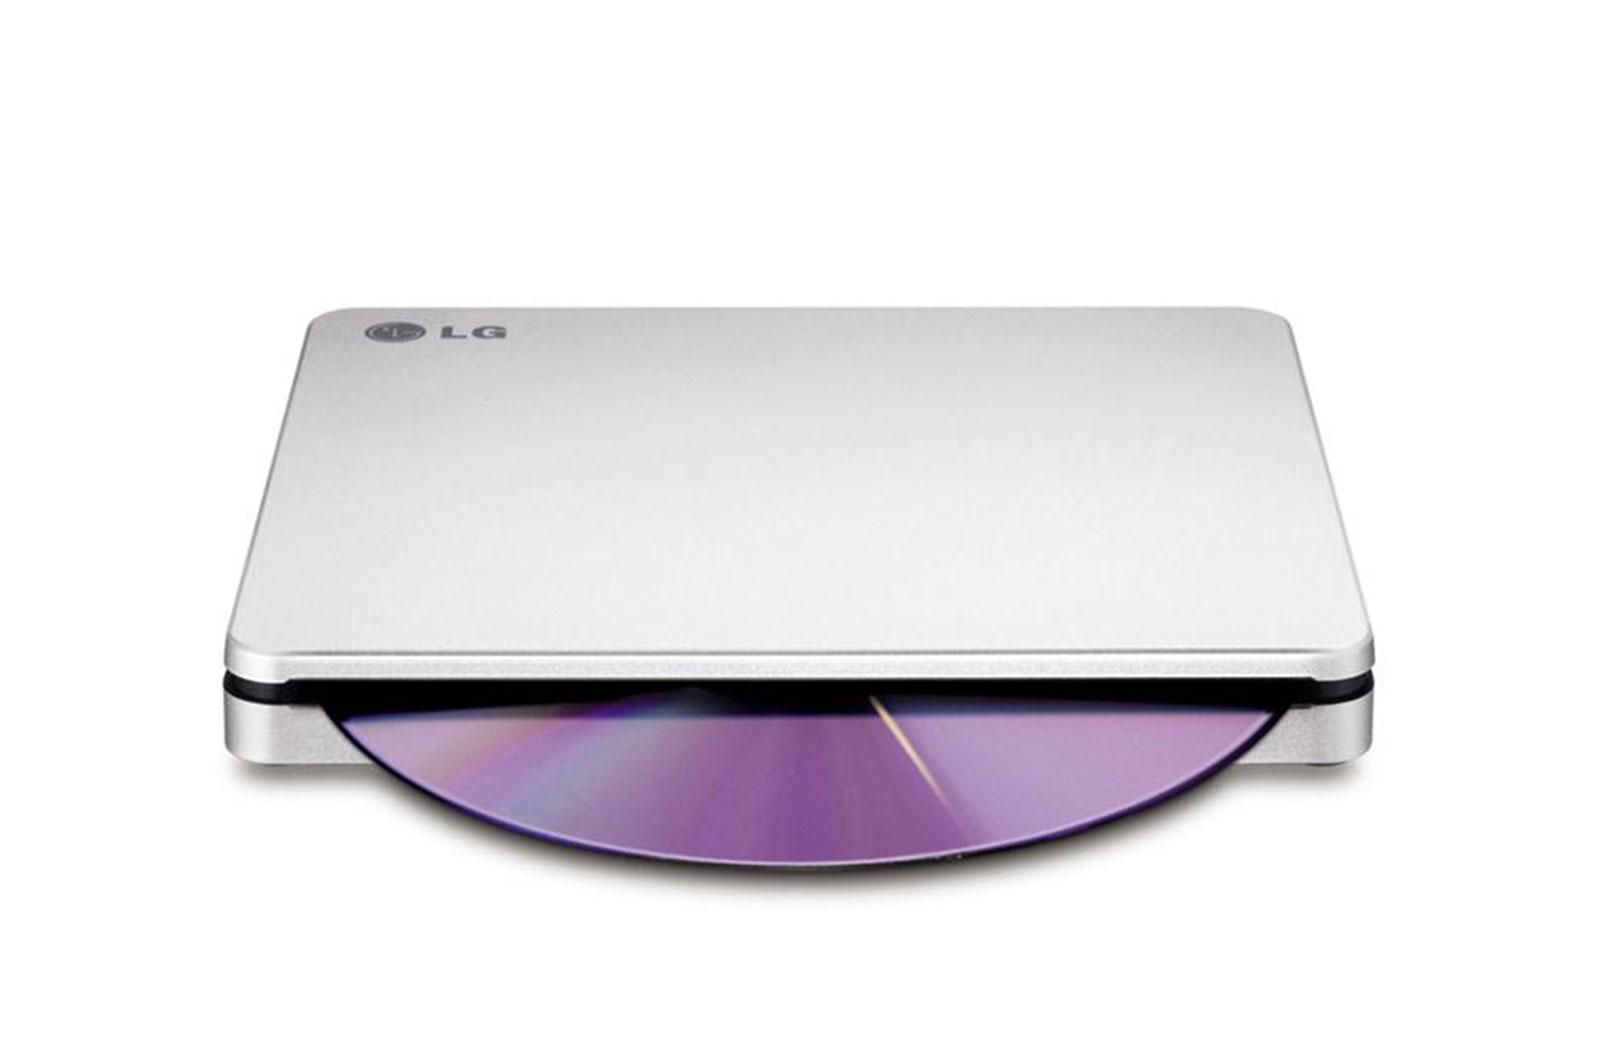 Ultra Slim Portable DVD-R Silver Hitachi-LG GP60NS6, GP60NS60 Series, DVD Write /Read Speed: 8x, CD Write/Read Speed: 24x, USB 2.0, Buffer 0.75MB, 144 mm x 137.5 mm x 14 mm._1